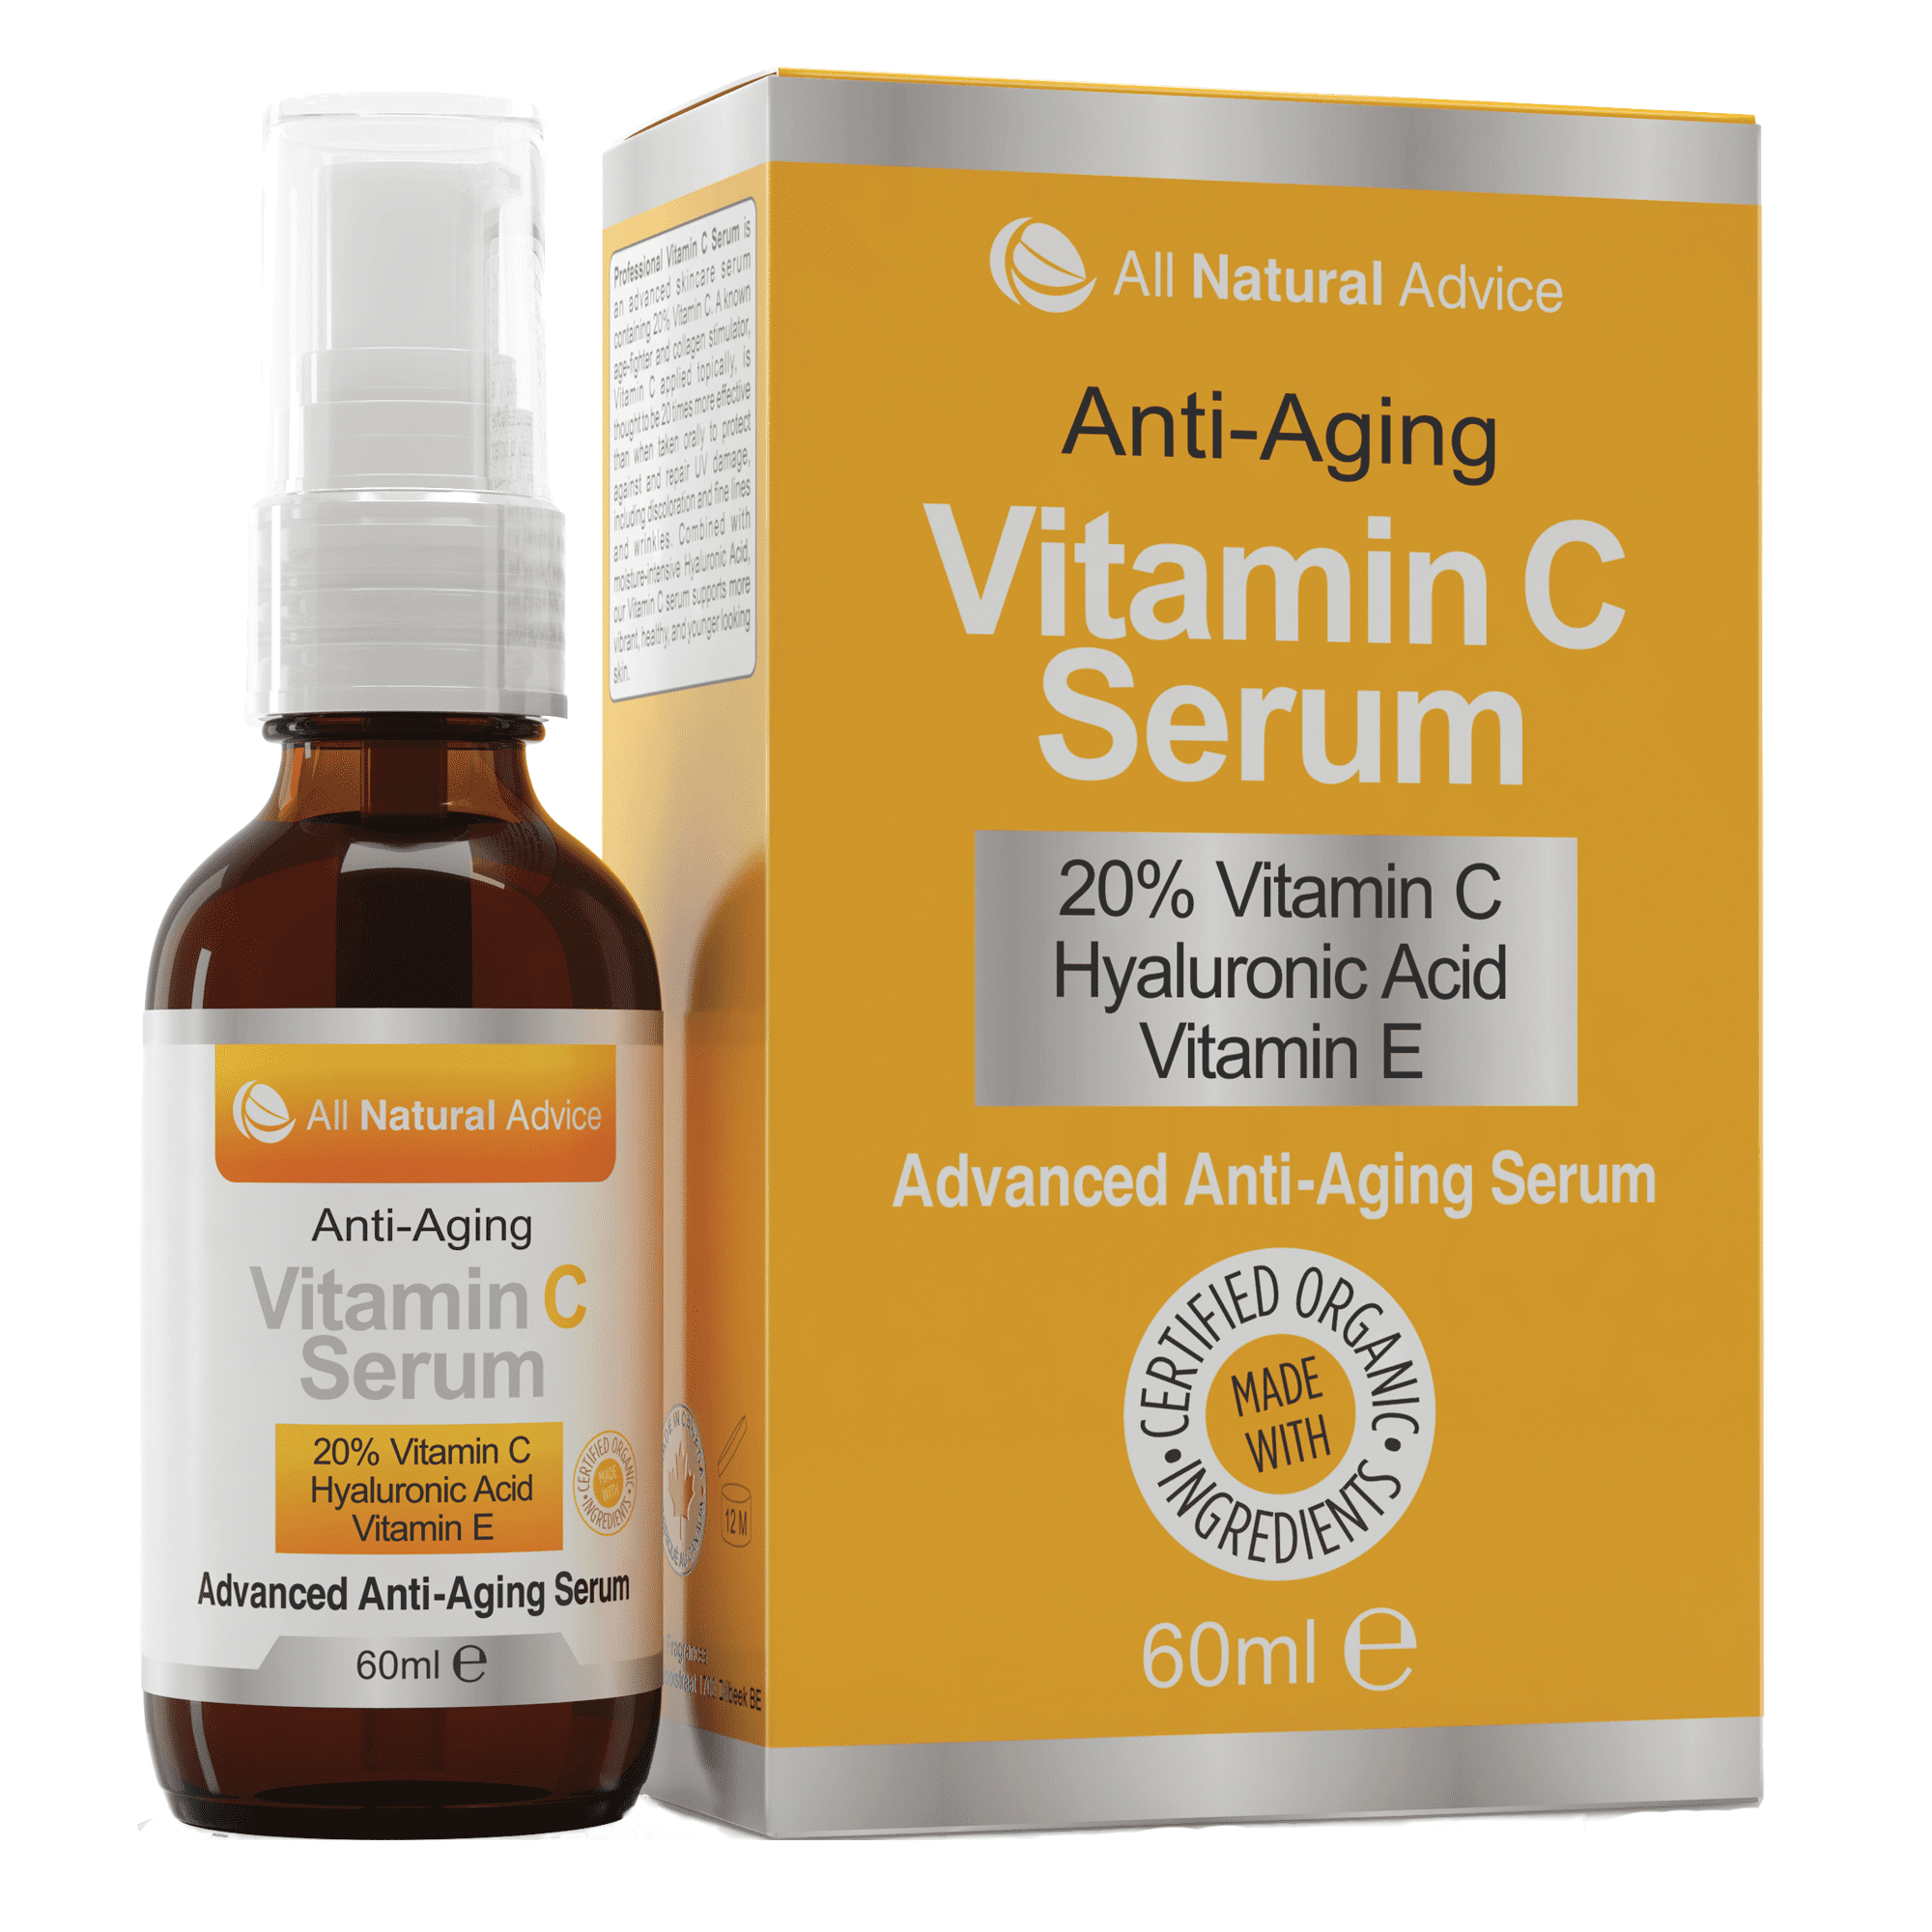 All Natural Advice Vitamin C Serum Acid and Vitamin E, 60ml - Walmart.com